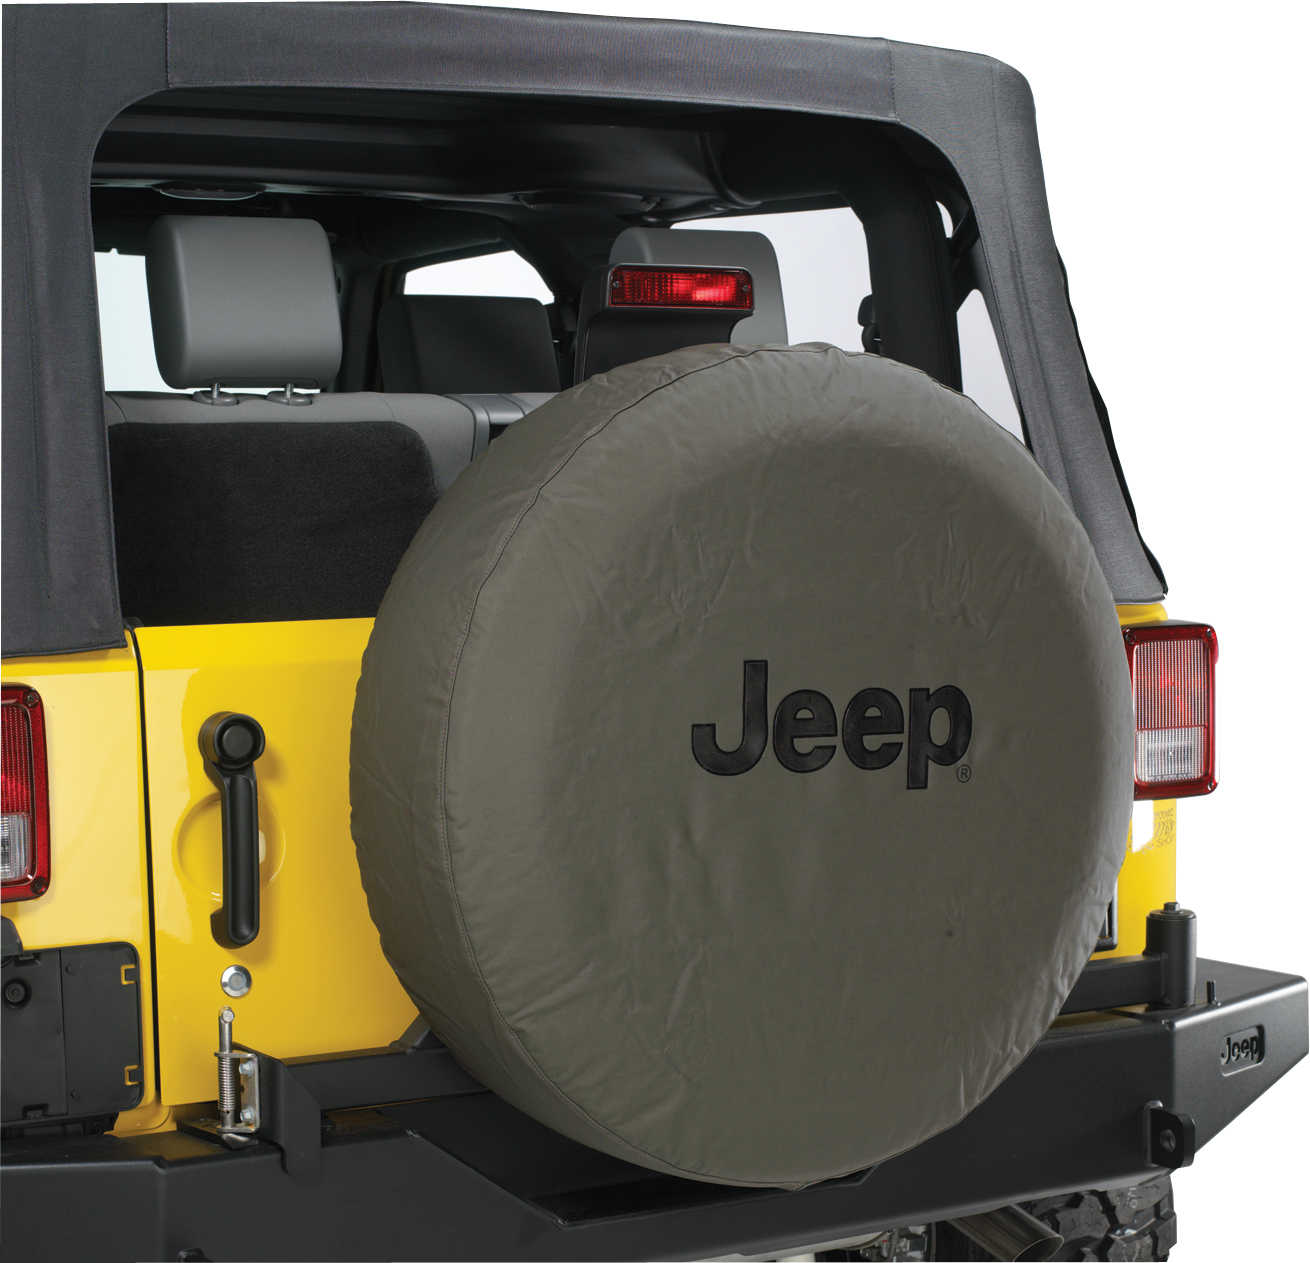 Mopar Jeep Logo Tire Covers in Khaki Denim with Black Jeep Logo | Quadratec